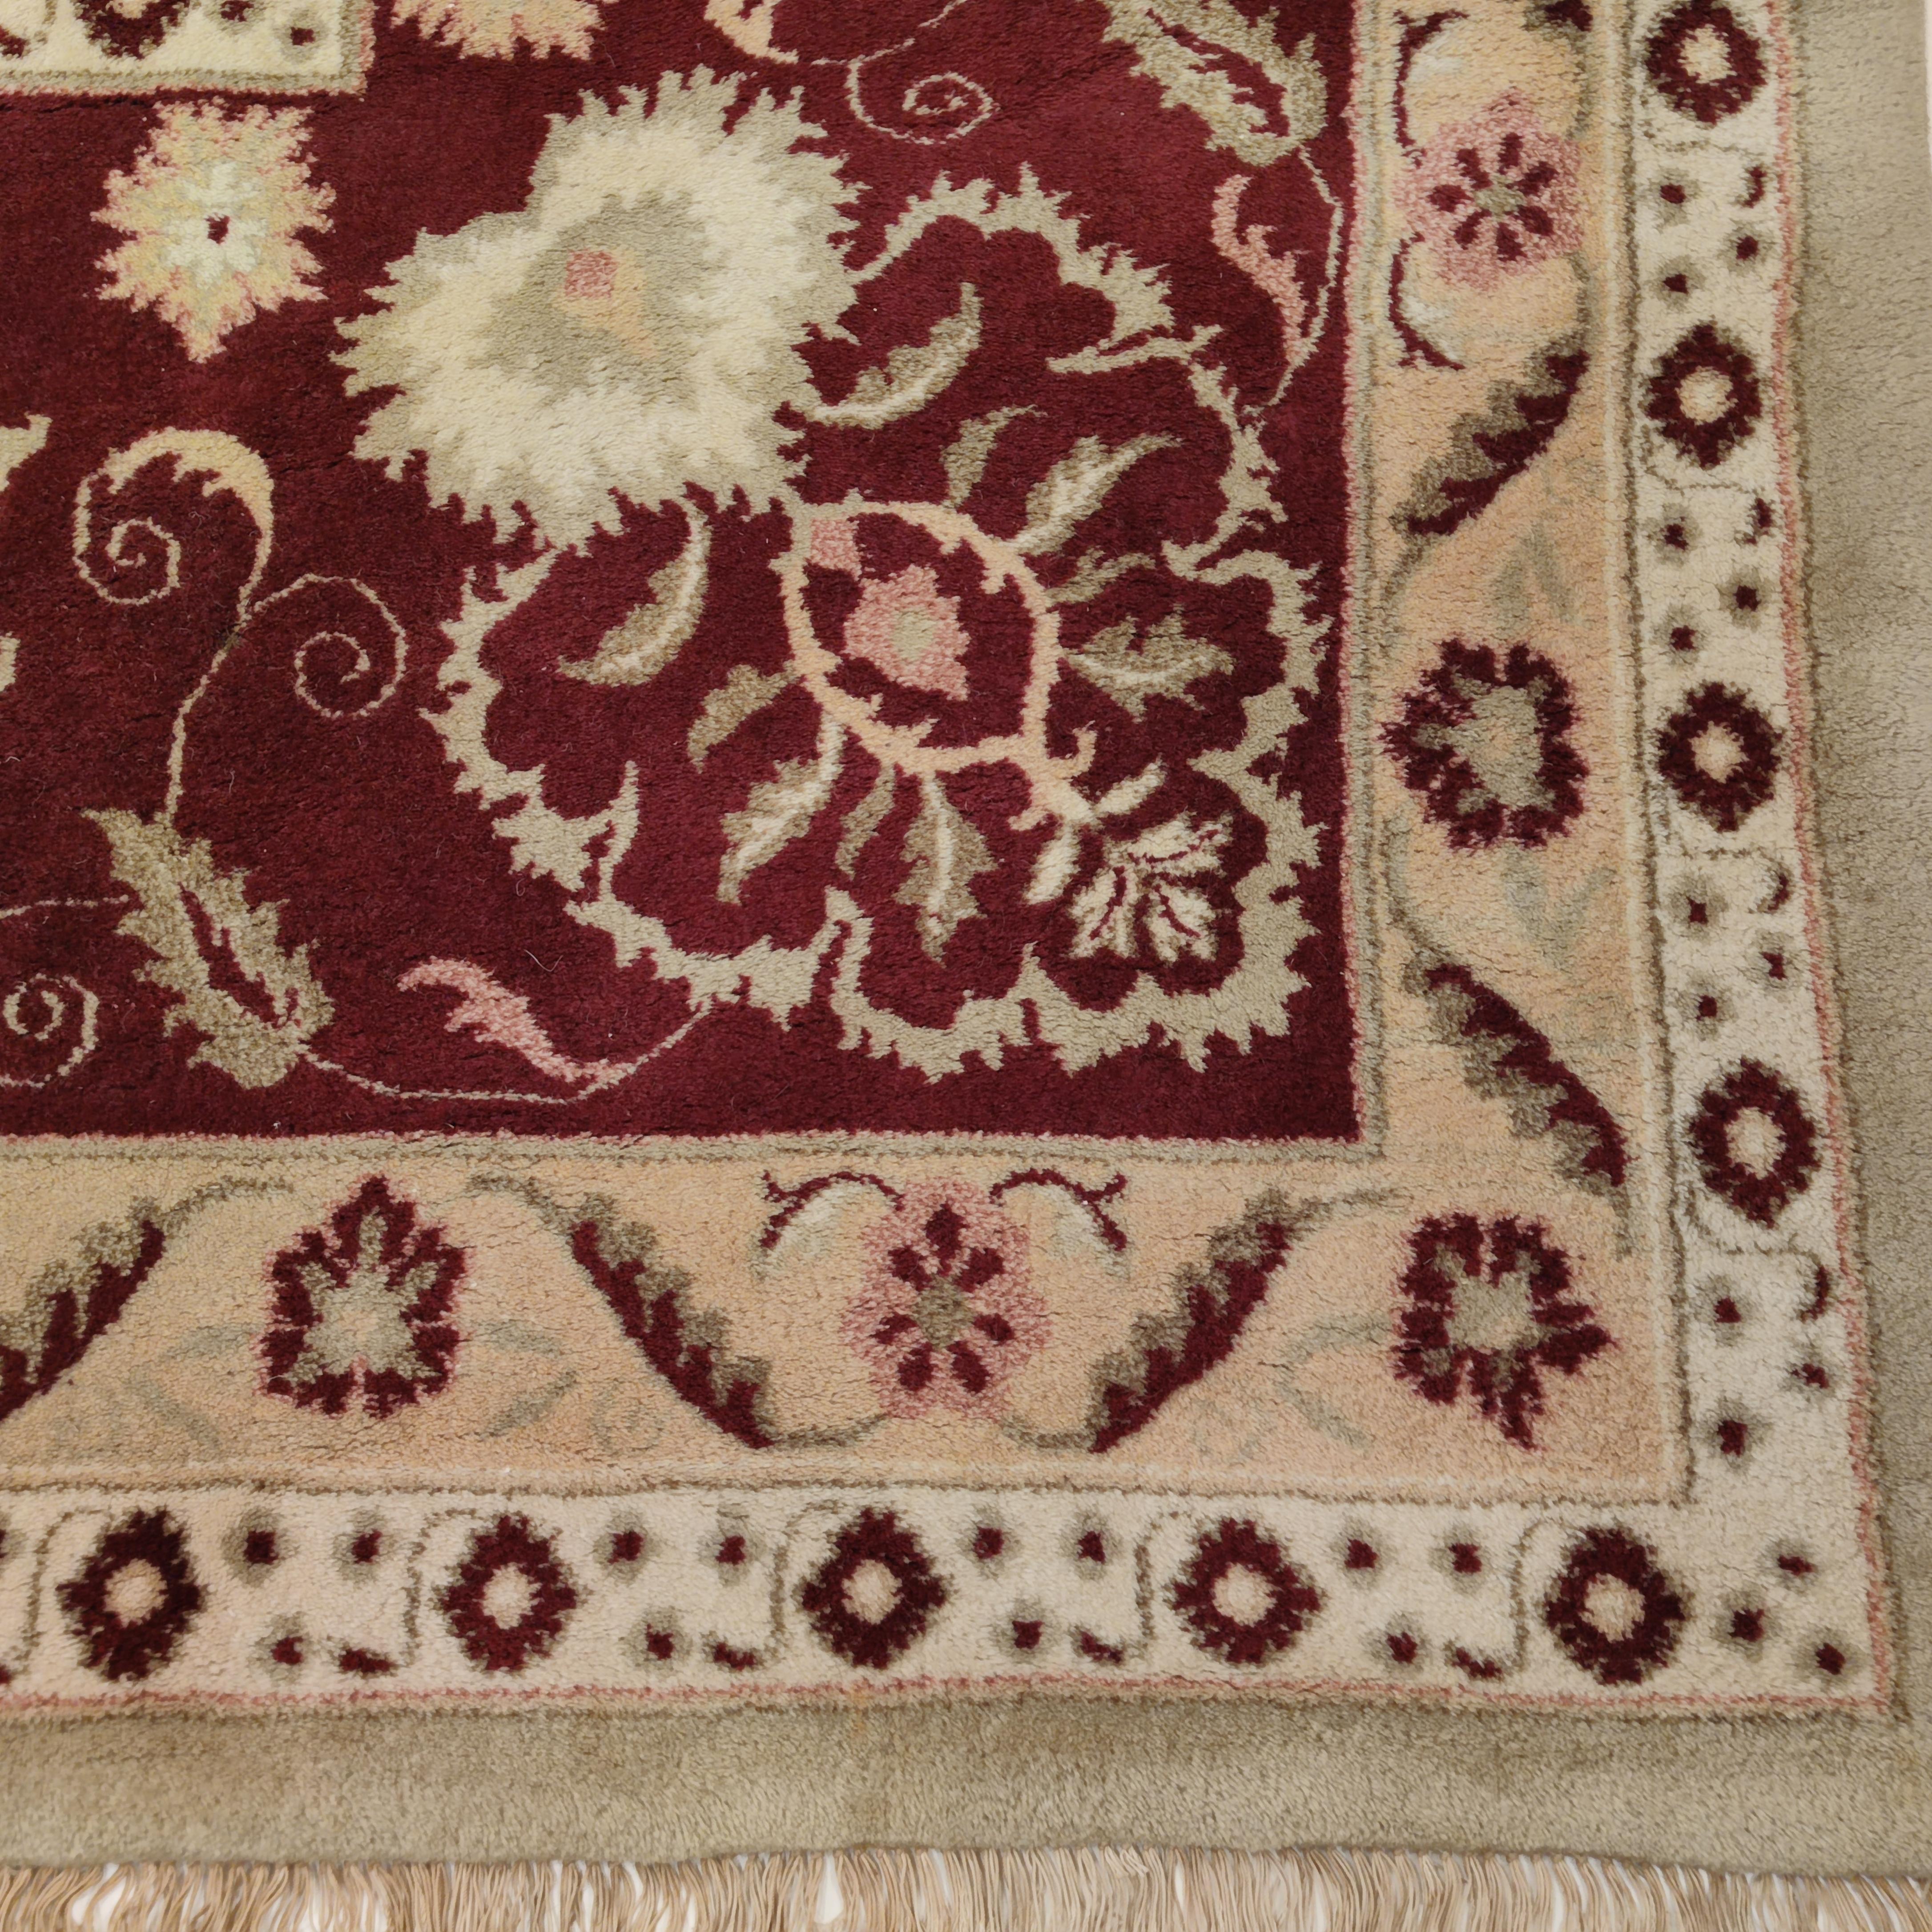 Oversize Vintage Celadon Green All-Over Design Agra Carpet with Ruby Red Border For Sale 11